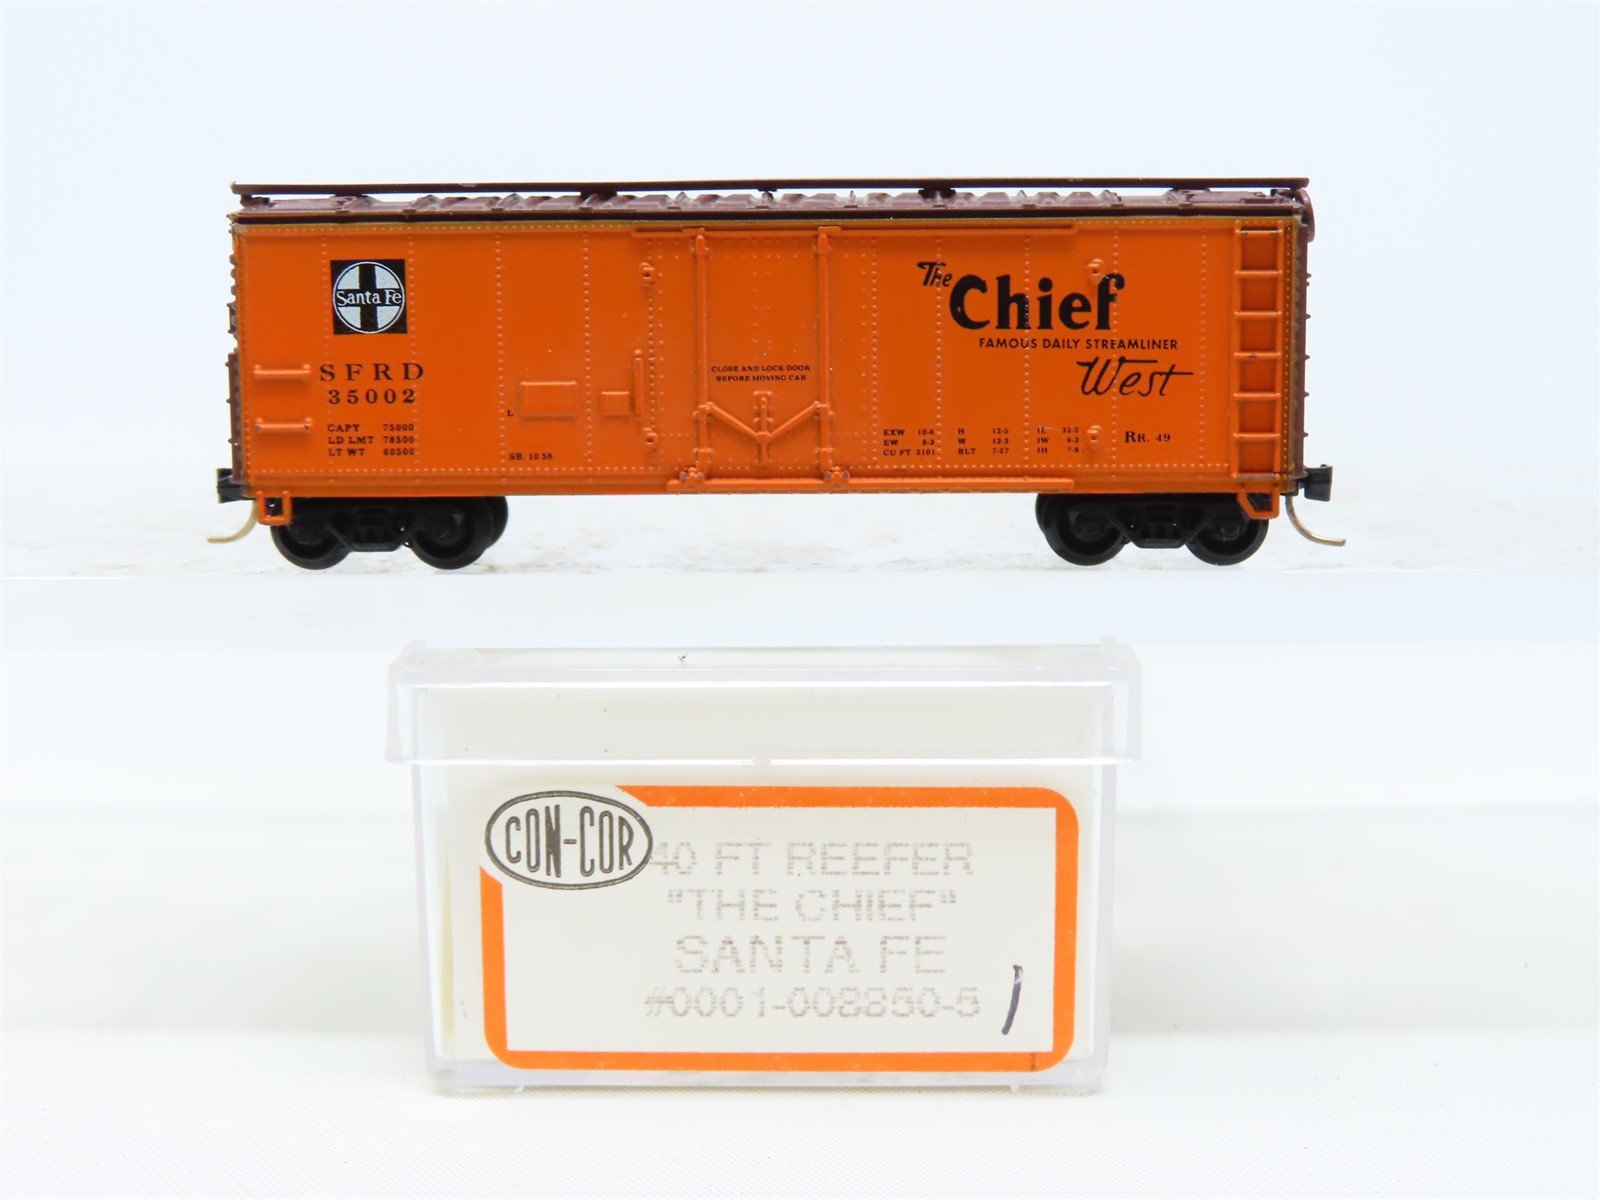 N Scale Con-Cor 0001-008850-5 SFRD Santa Fe "The Chief" 40' Reefer Car #35002